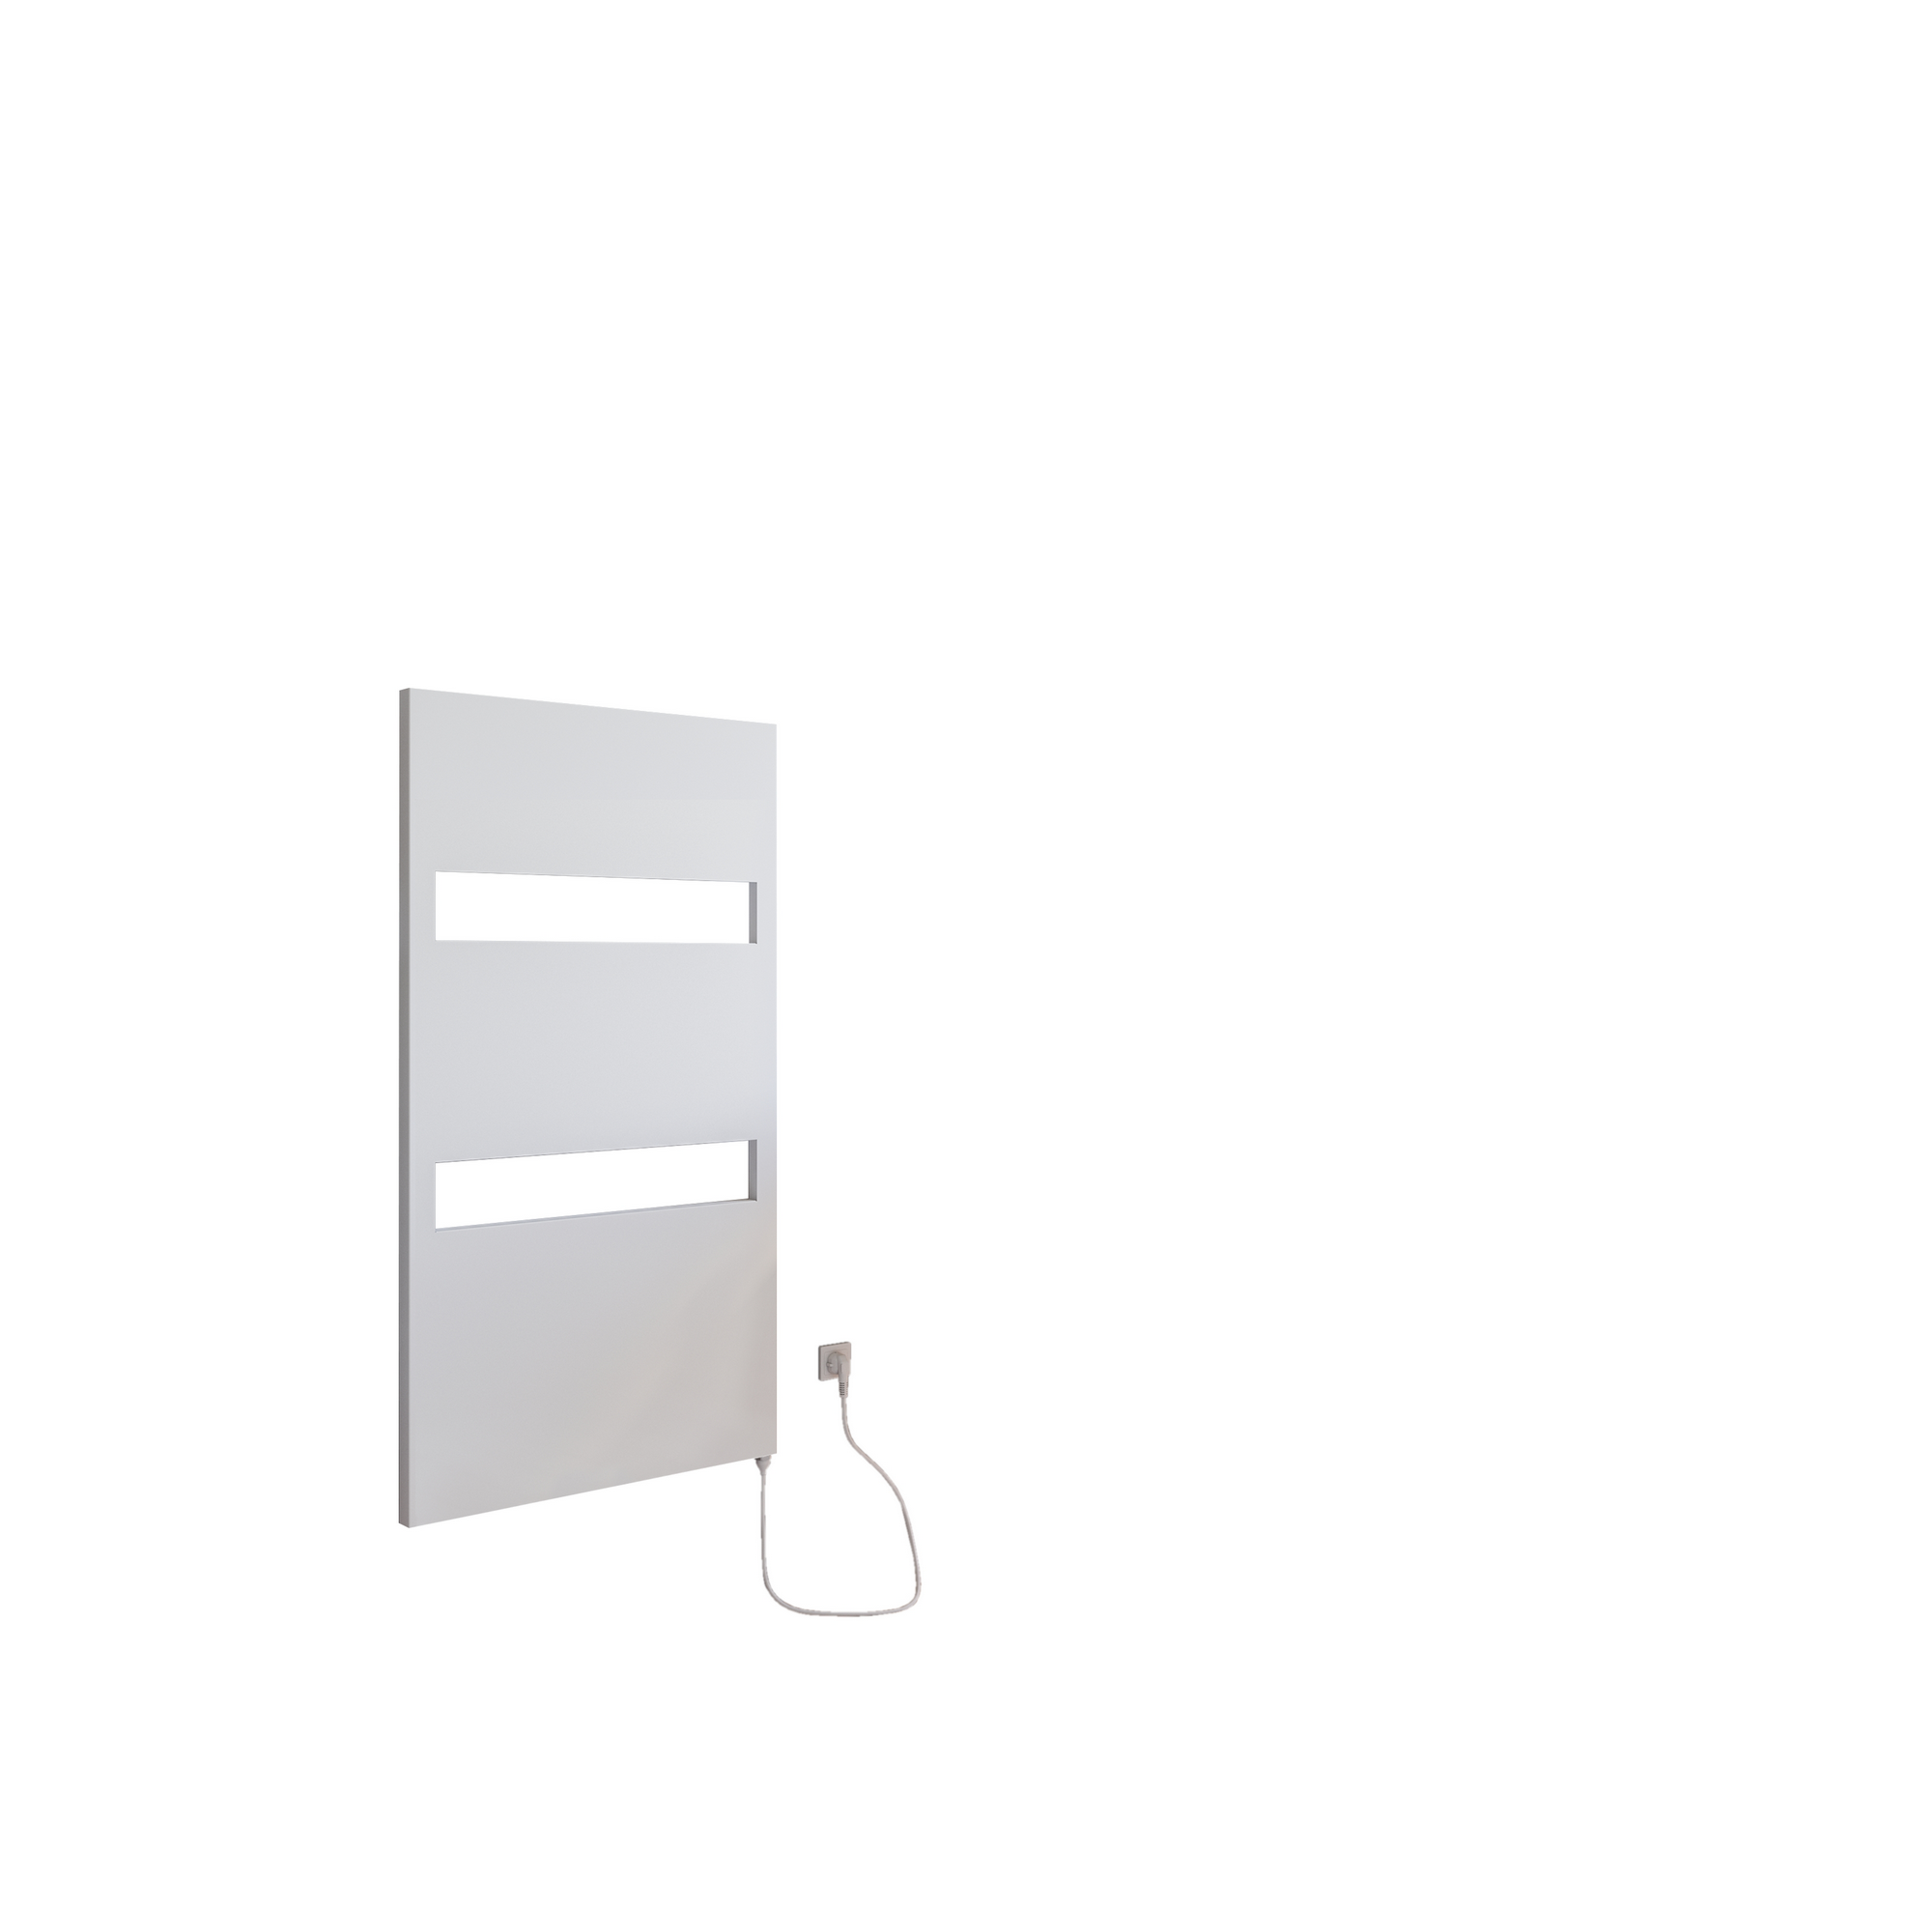 Badheizkörper 'Turin' weiß 114,3 x 60,5 cm, Anschluss rechts + product picture